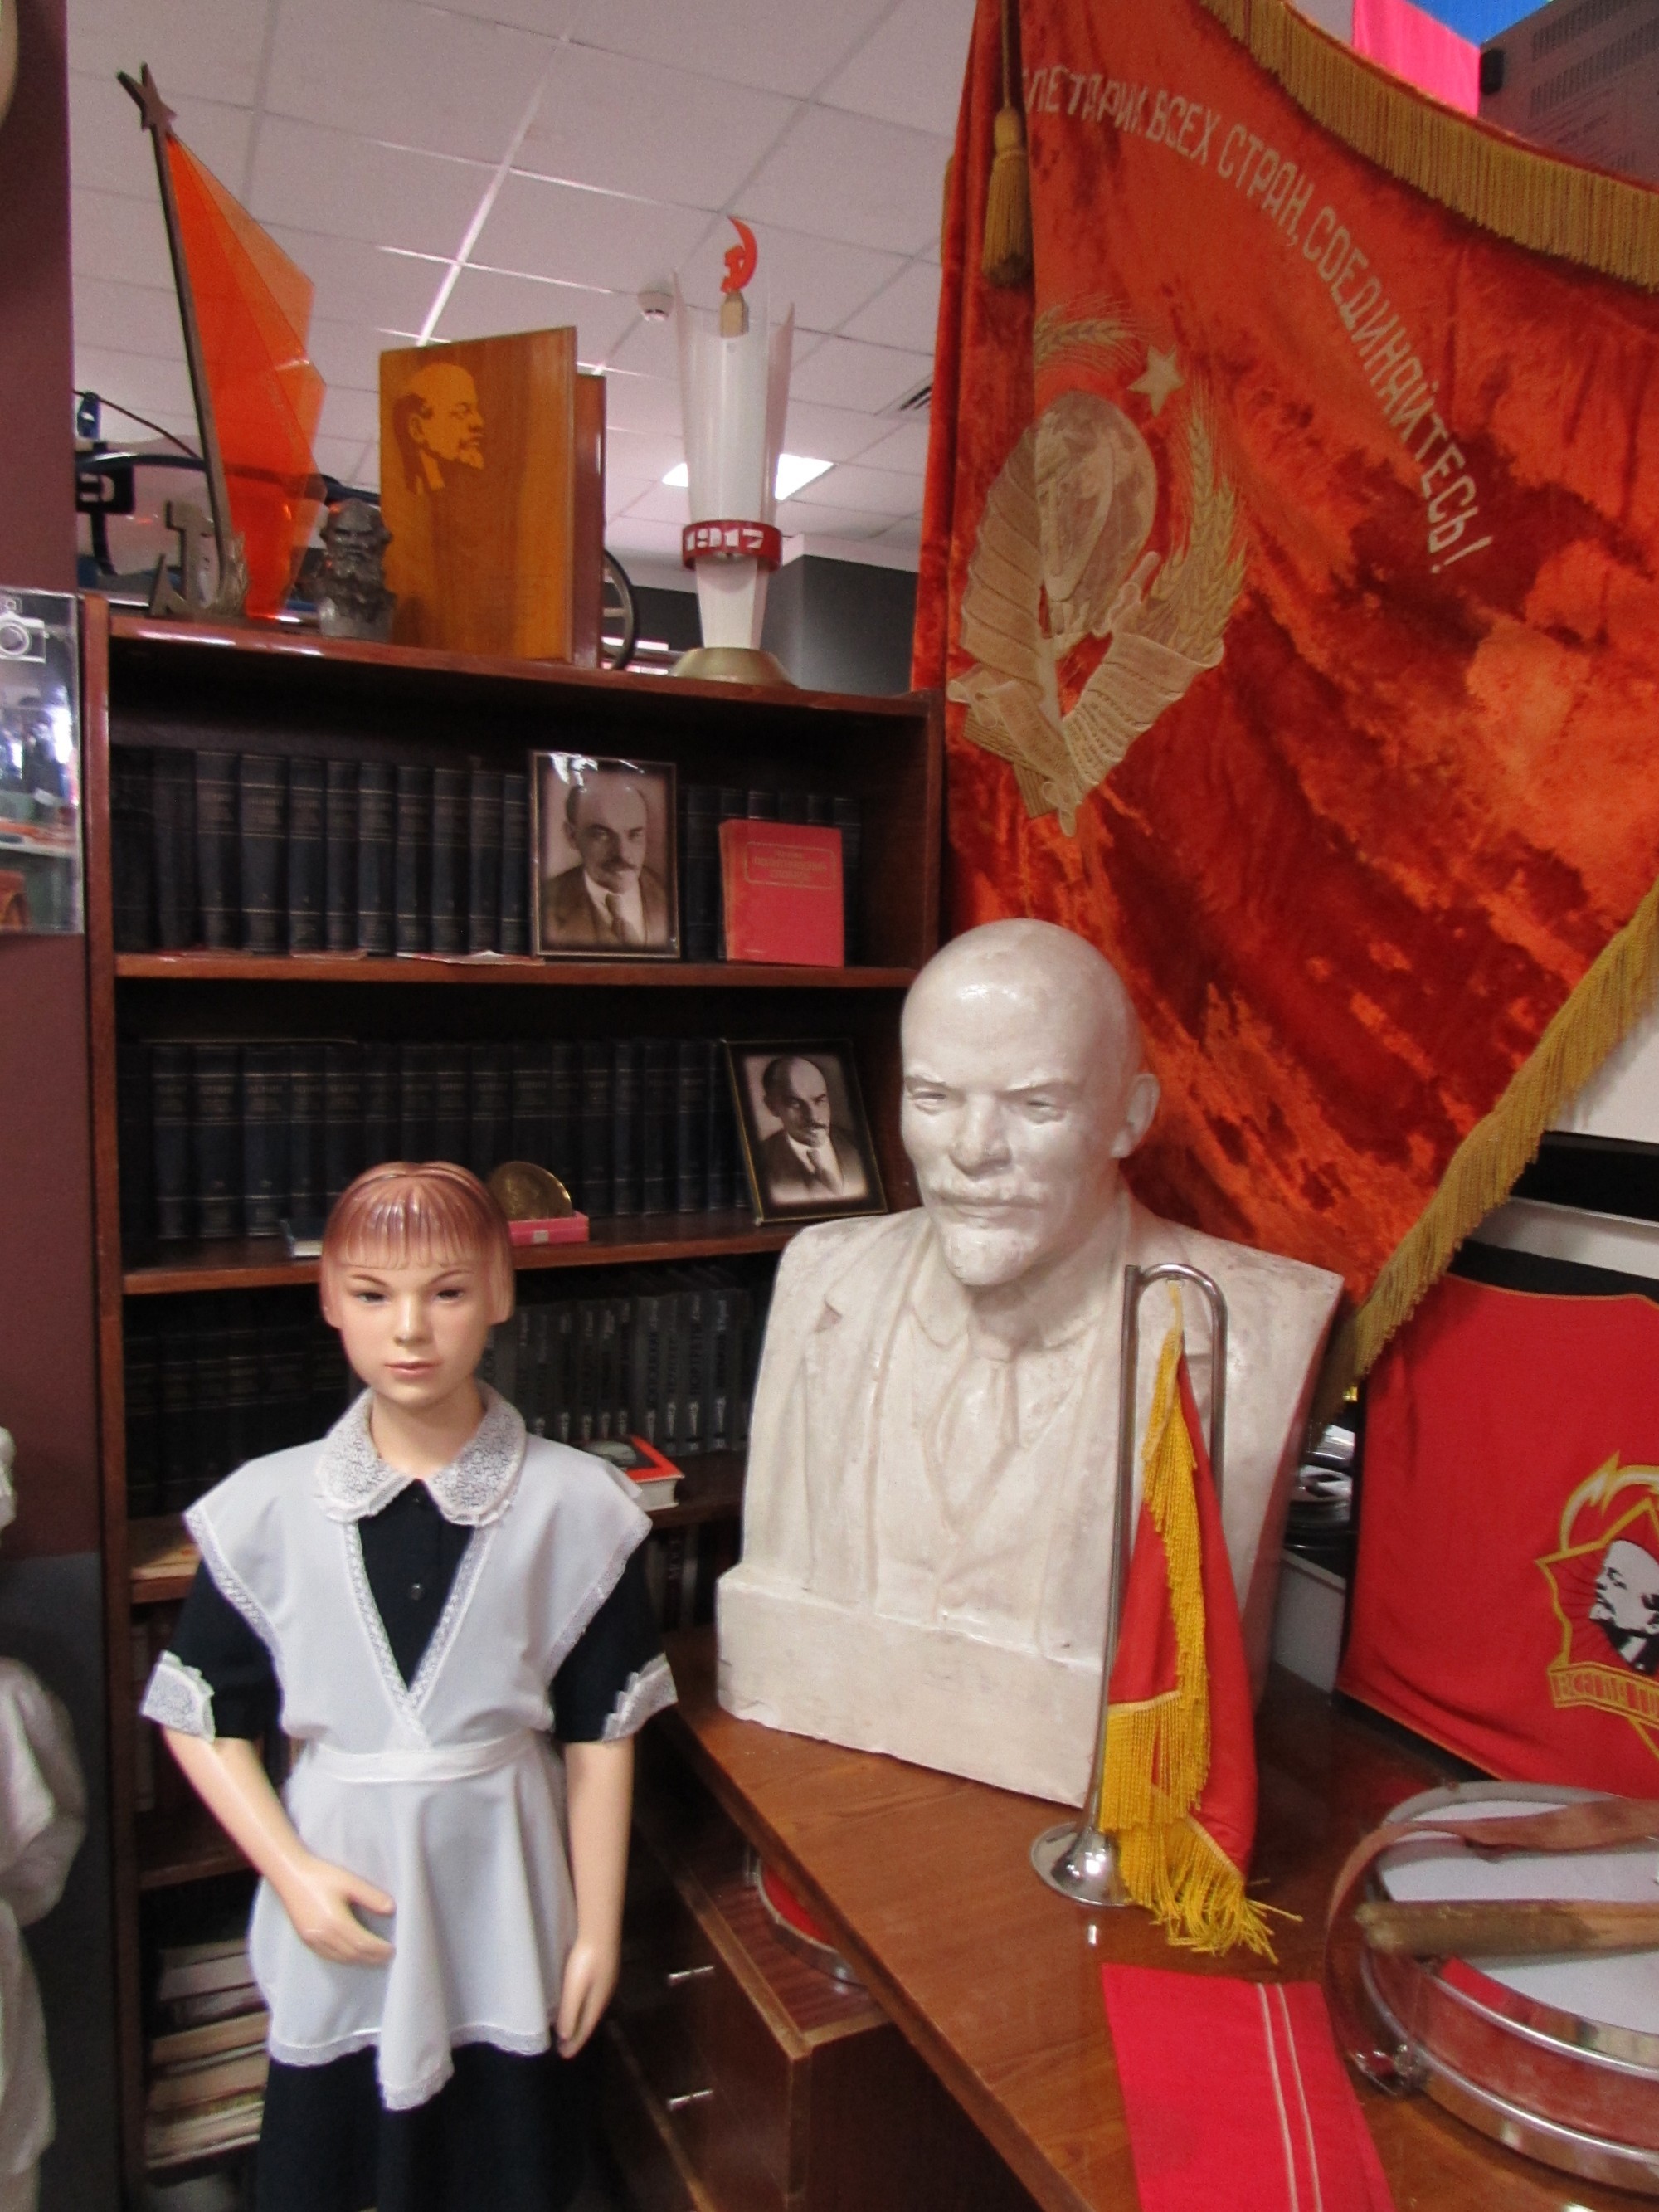 Музей СССР